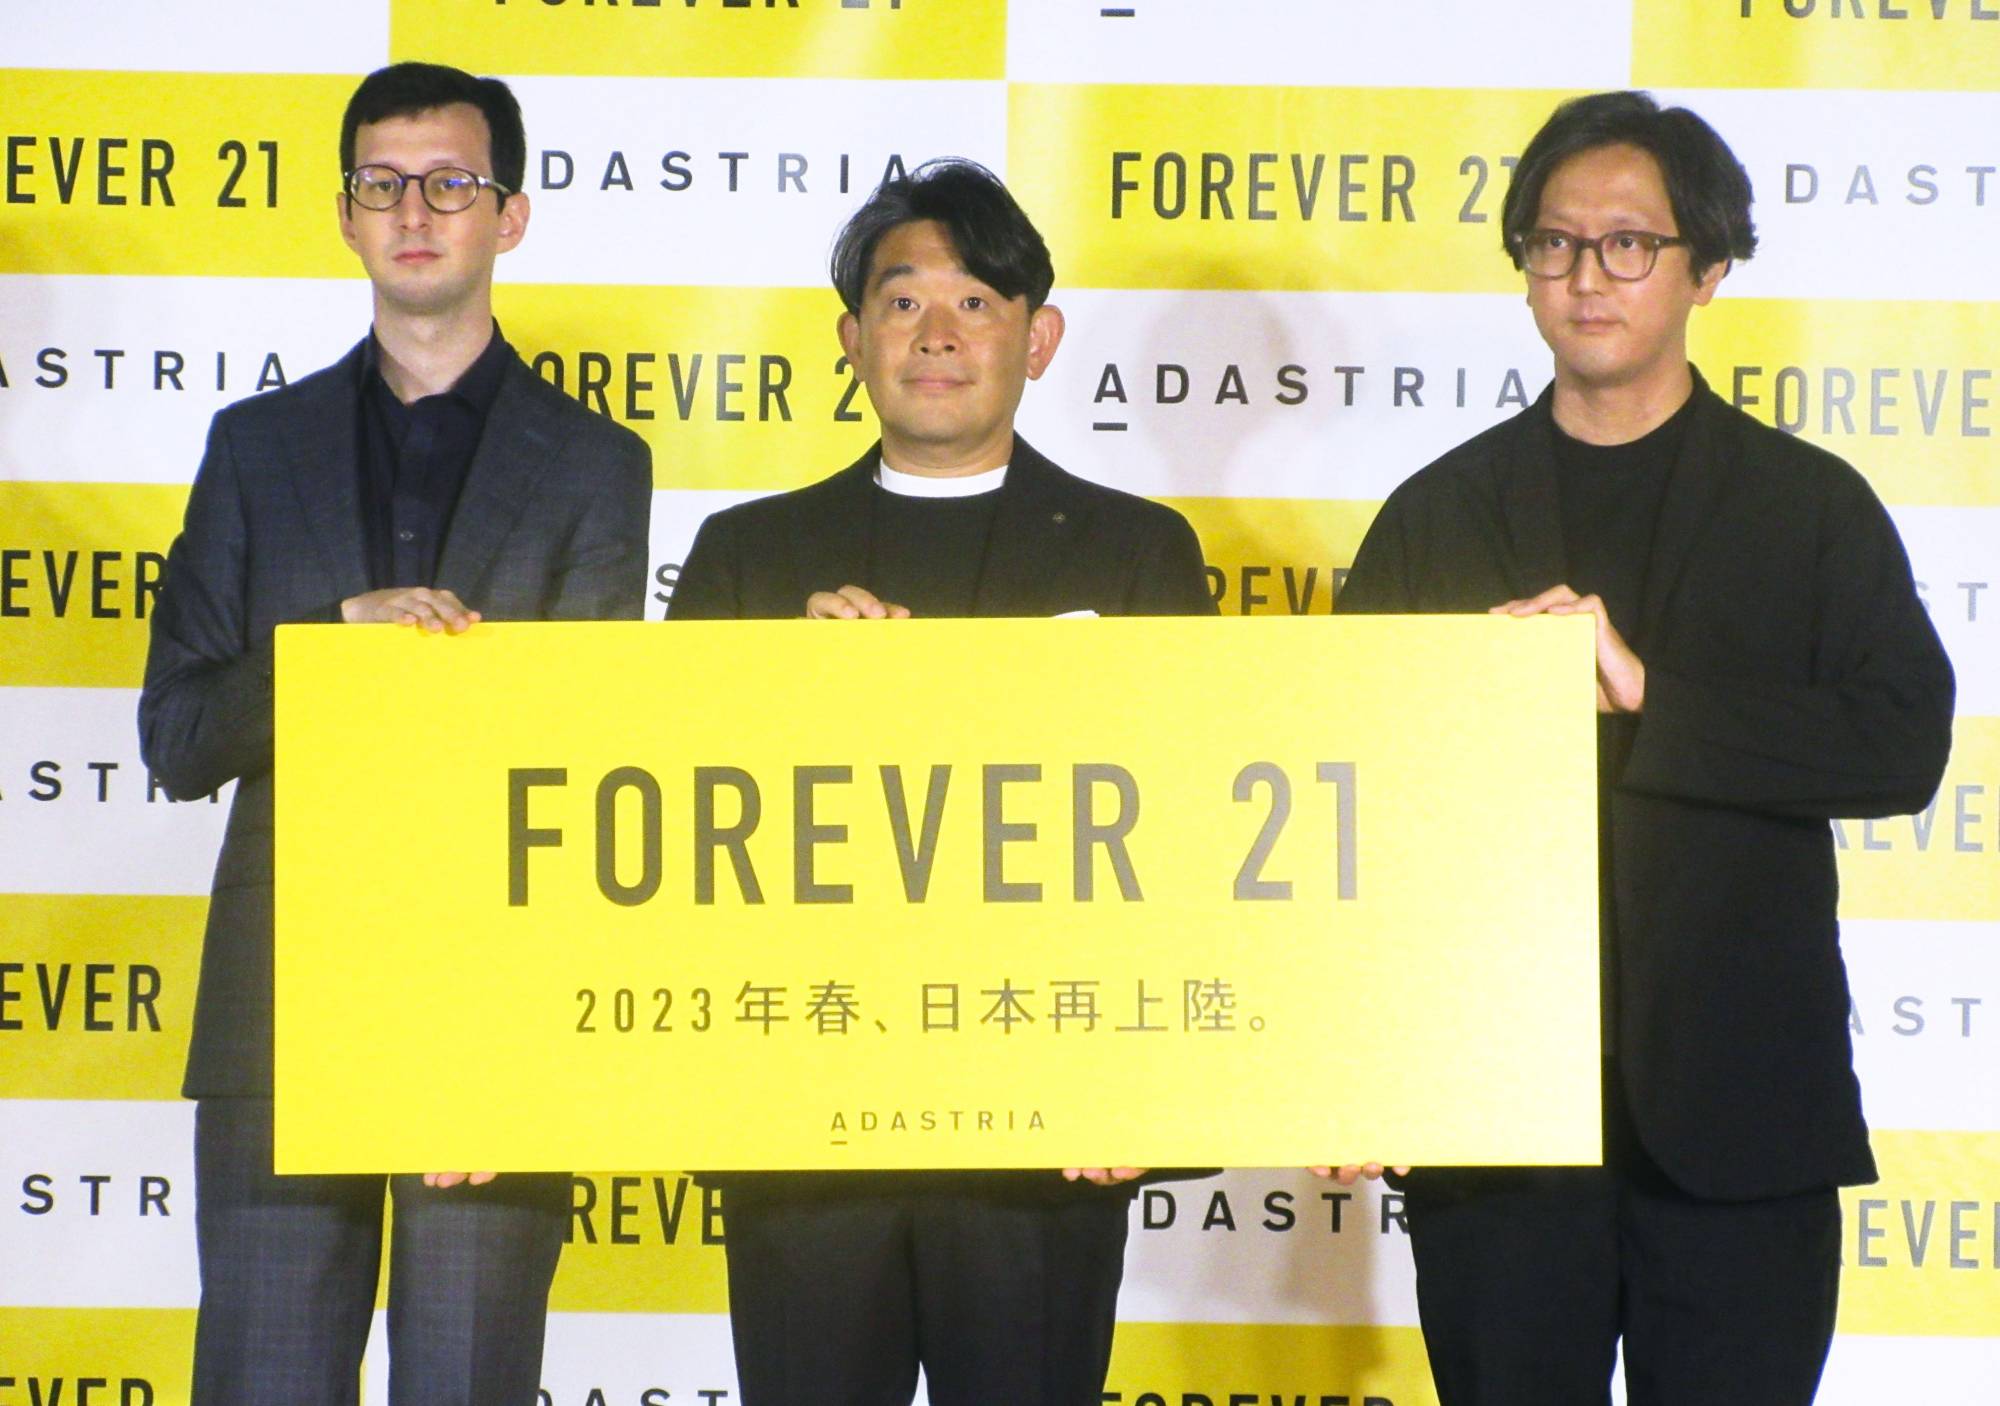 U.S. fashion brands Forever 21, American Eagle returning to Japan